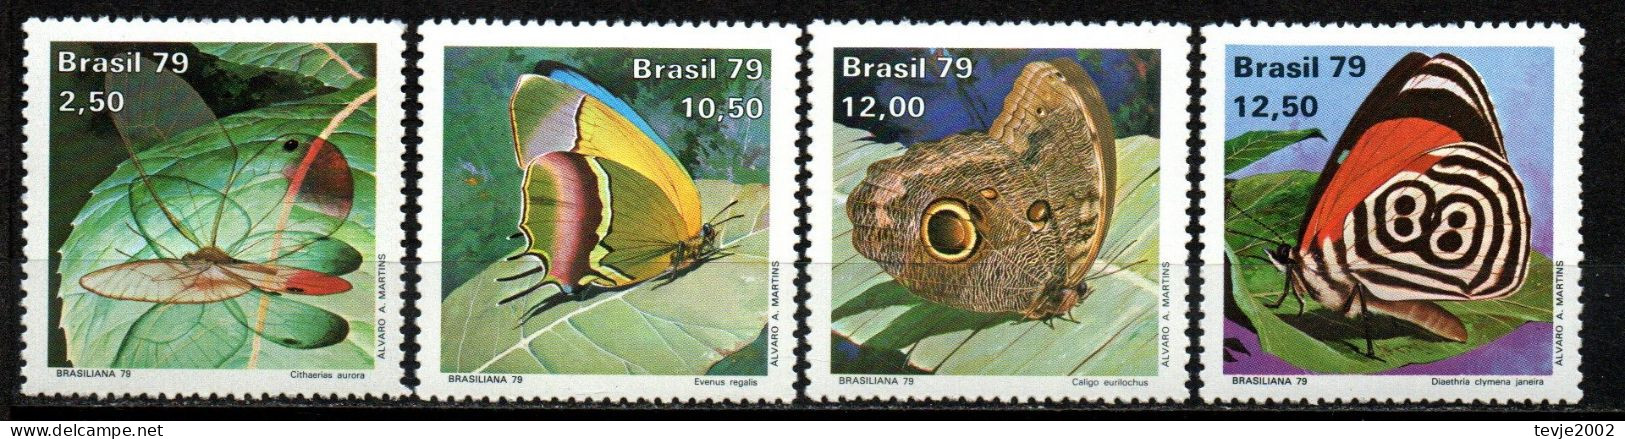 Brasilien 1979 - Mi.Nr. 1716 - 1719 - Postfrisch MNH - Tiere Animals Schmetterlinge Butterflies - Farfalle